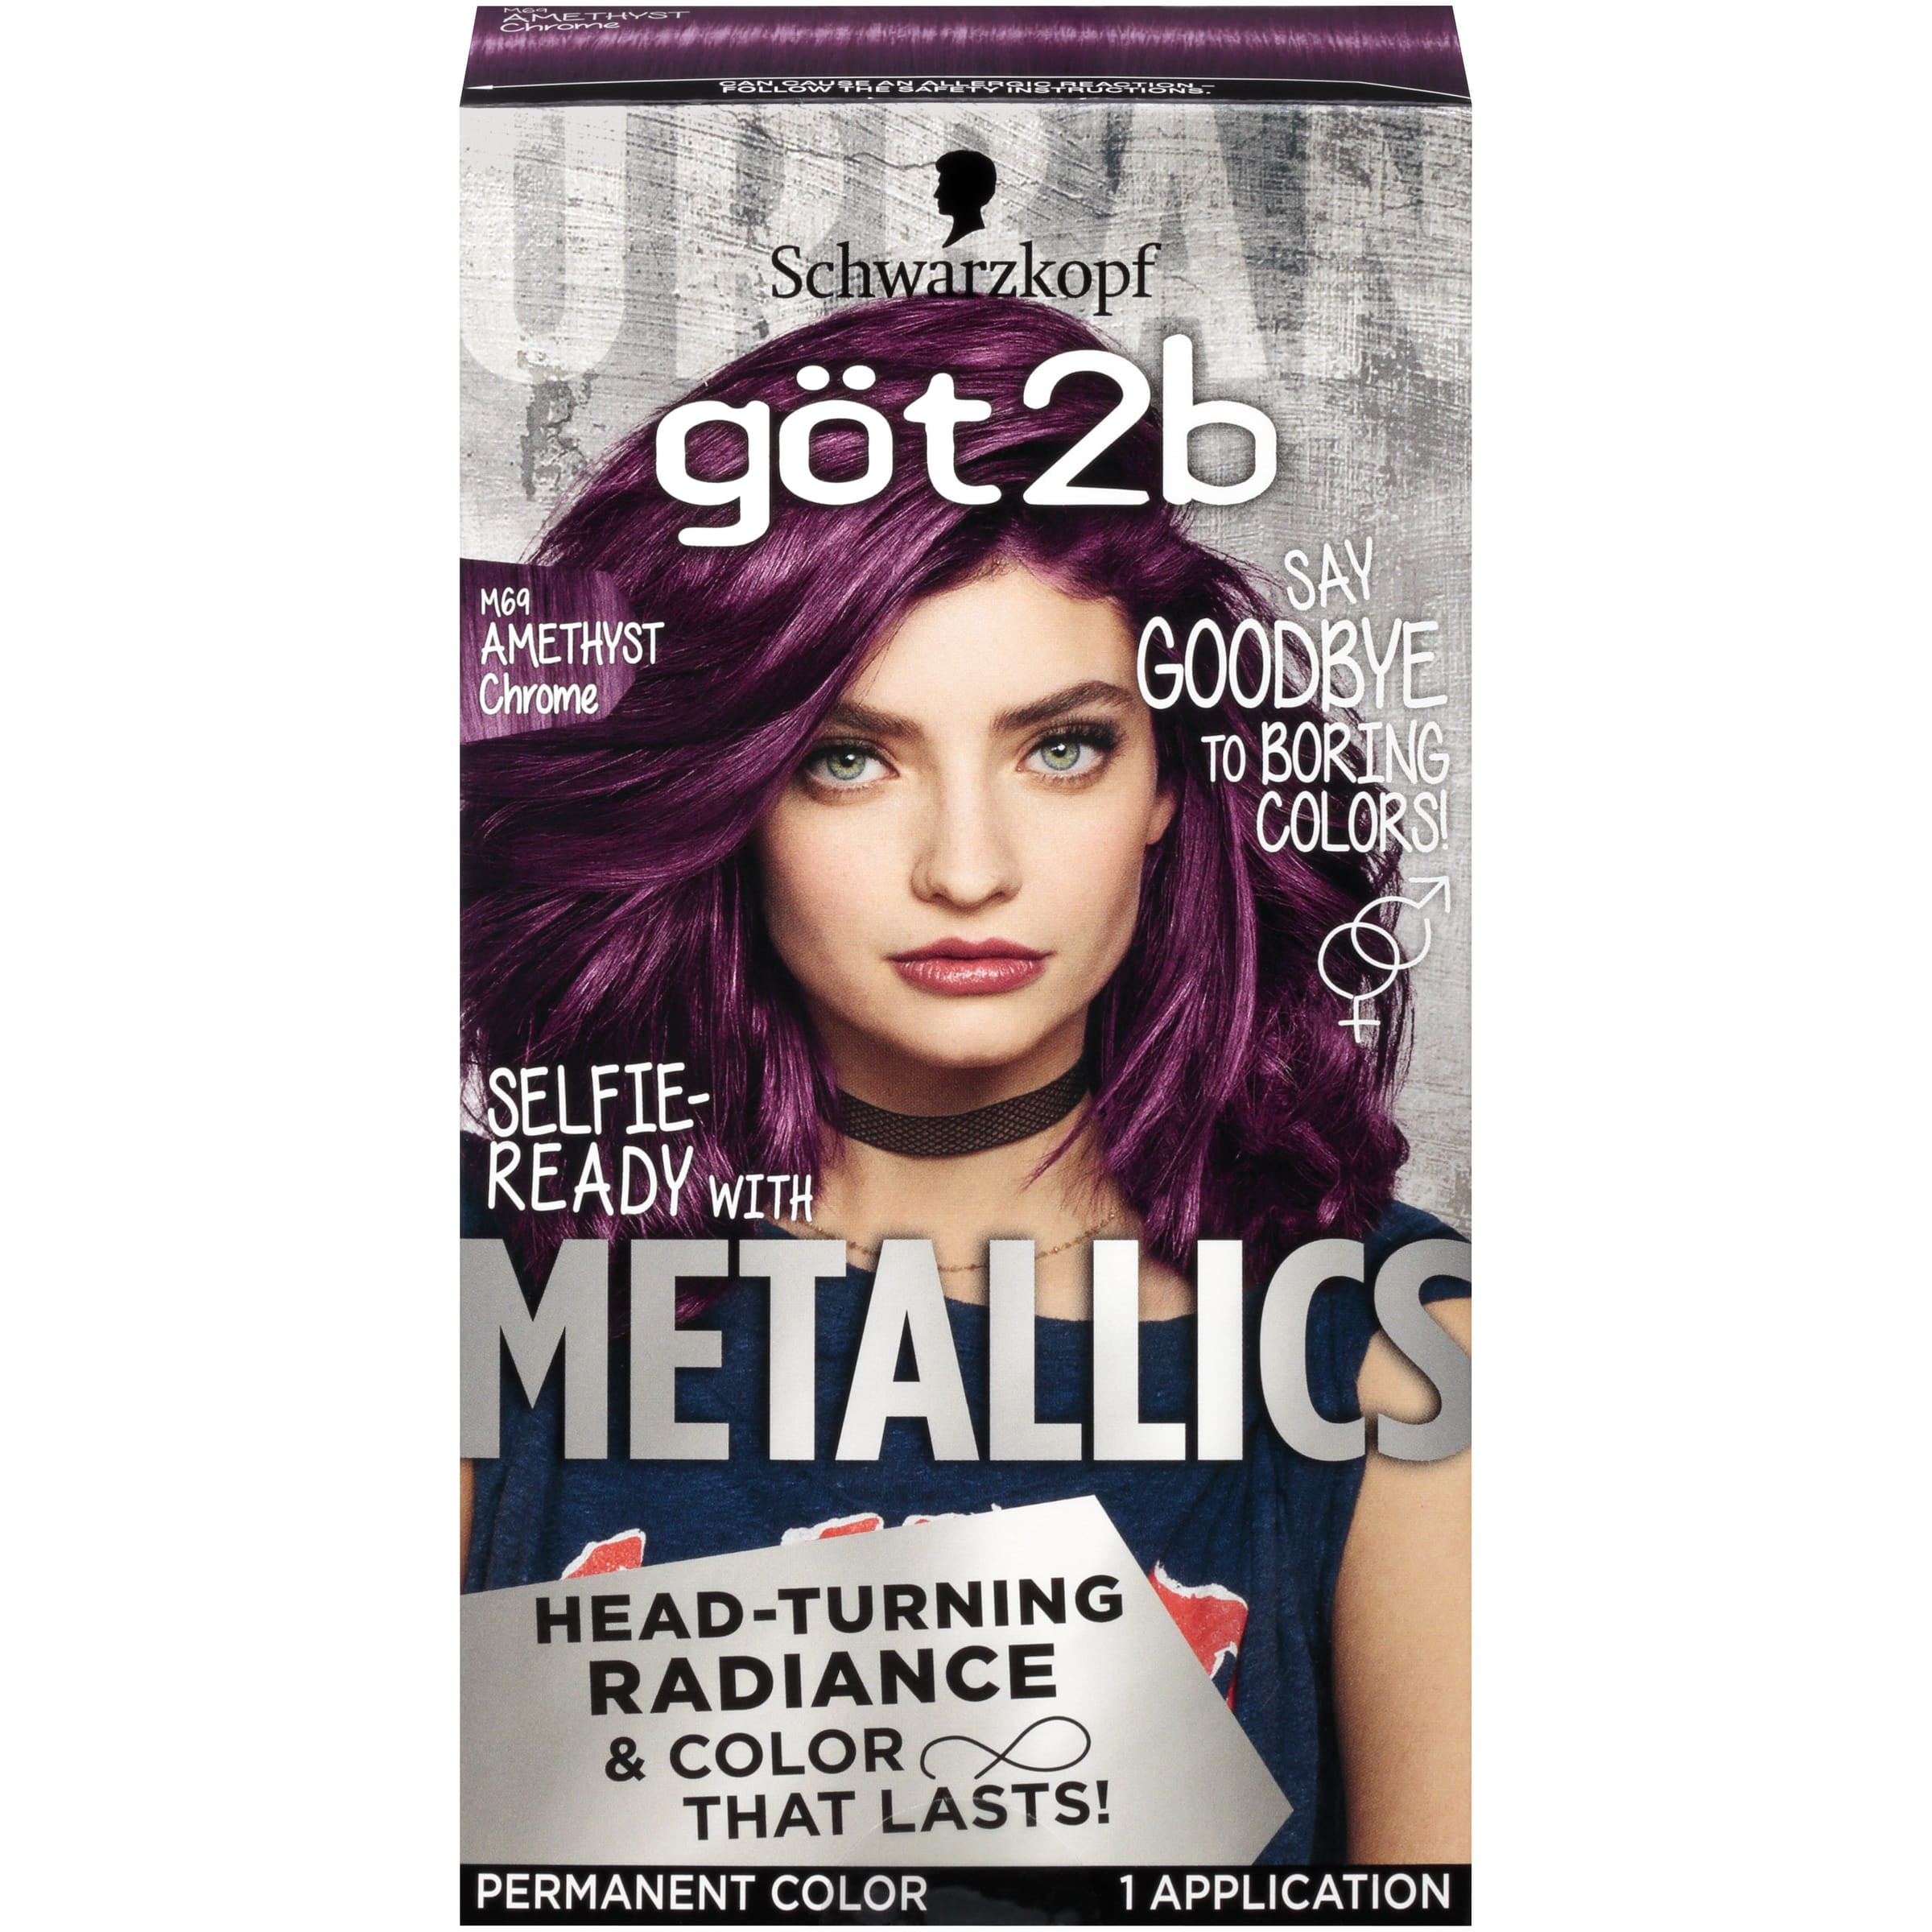 niettemin dutje noedels Schwarzkopf Got2b Metallics Permanent Hair Color, M69 Amethyst Chrome -  Walmart.com